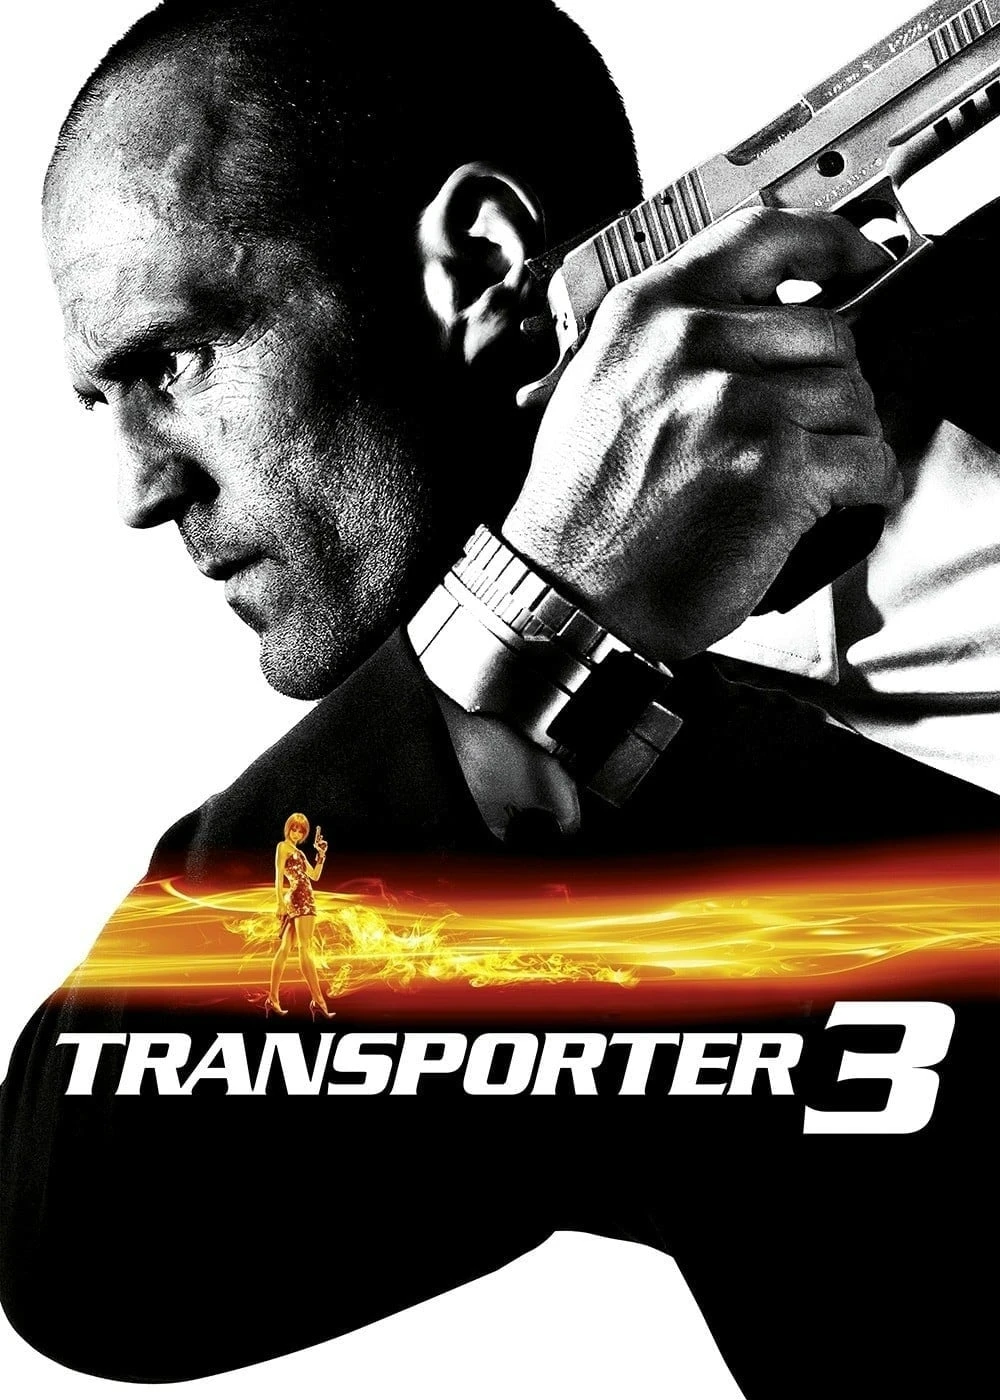 Transporter 3 | Transporter 3 (2008)